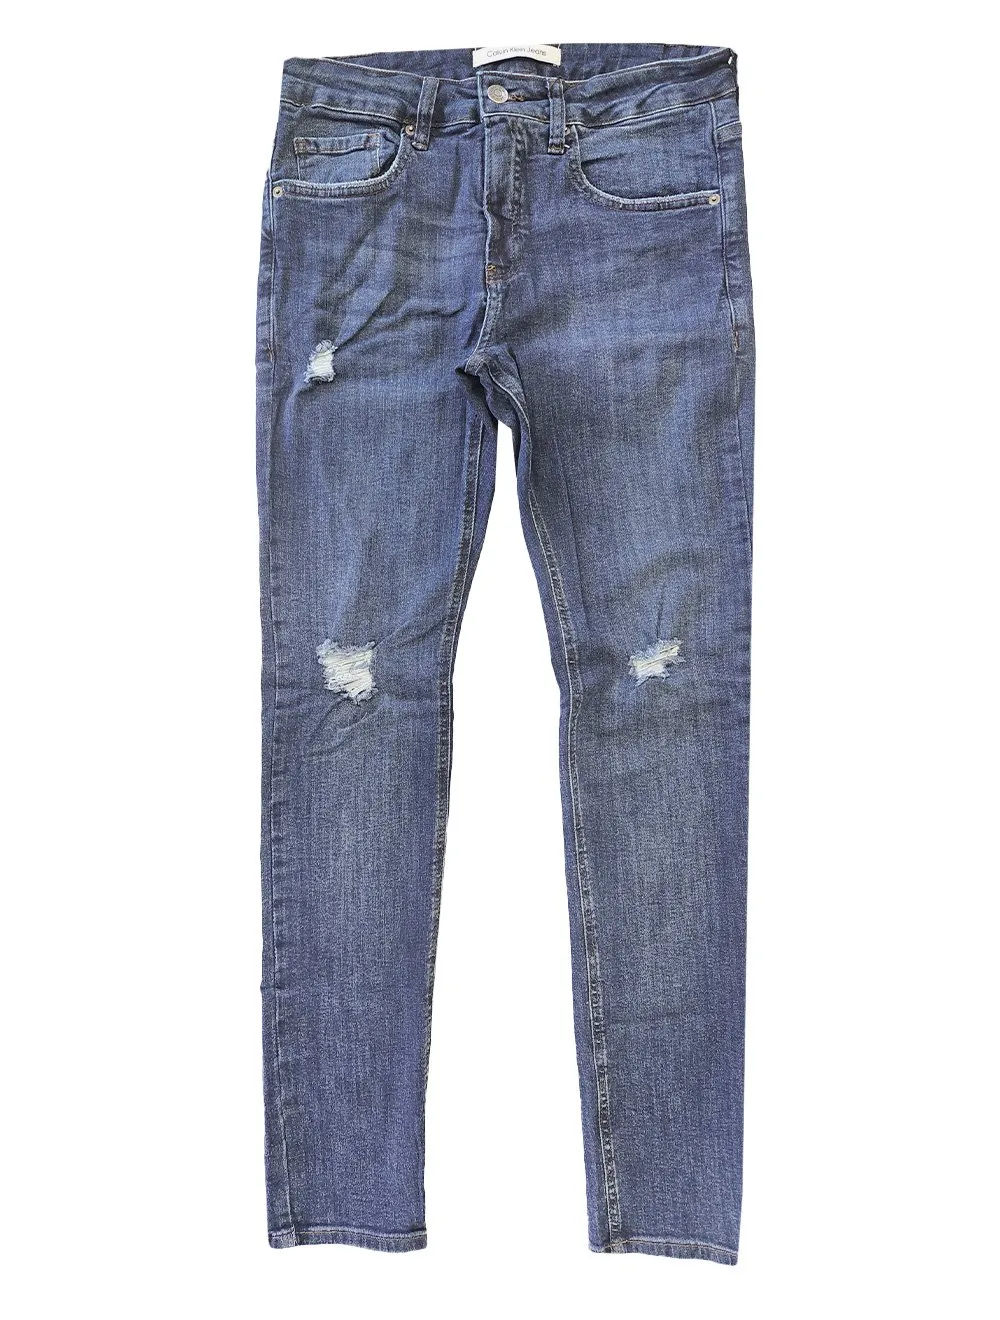 Calça Calvin Klein Jeans Masculina Stretch Destroyed Navy Tag Azul Marinho